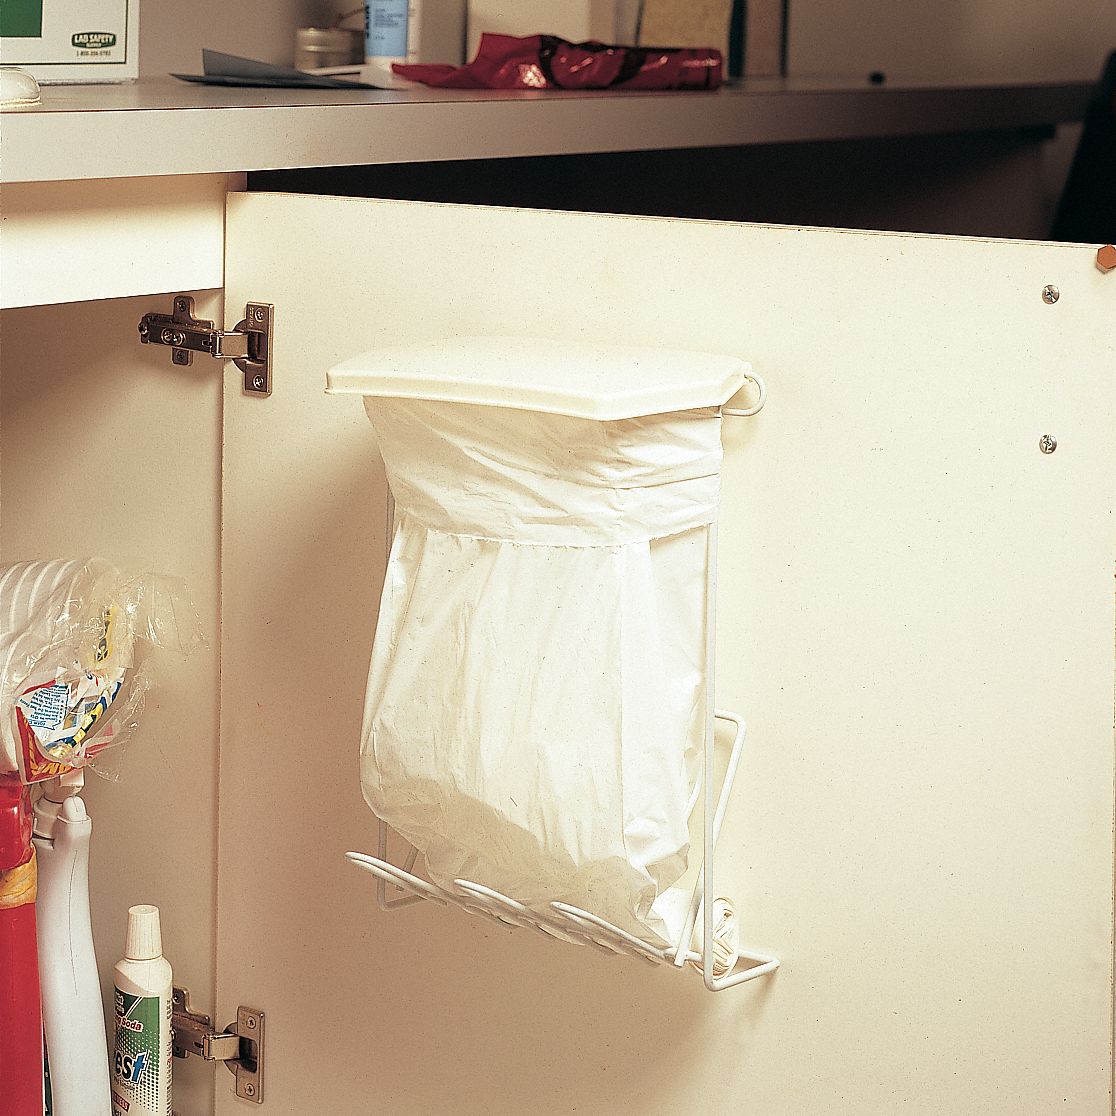 3UTD7 - Biohazard Waste Bag Dispenser 1 gal.